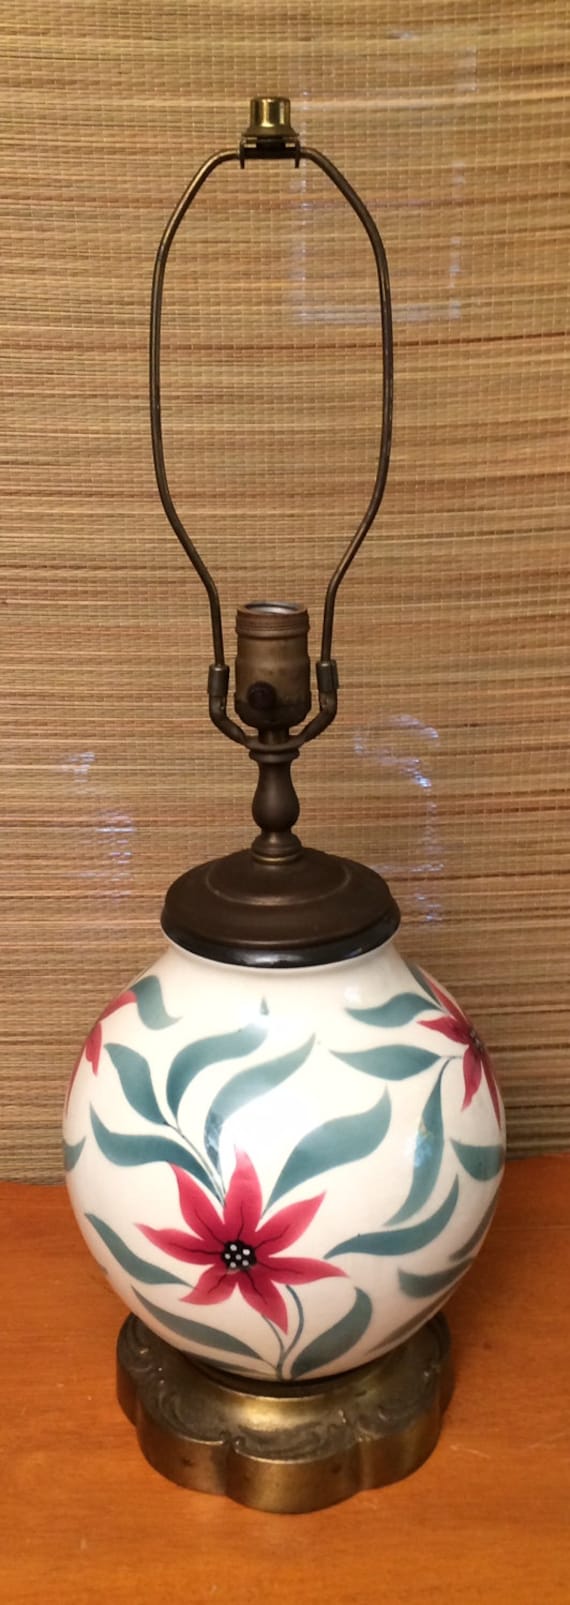 Vintage Pointsettia Pottery Lamp Mid-Century Modern Hollywood Regency Floral ART 1950s